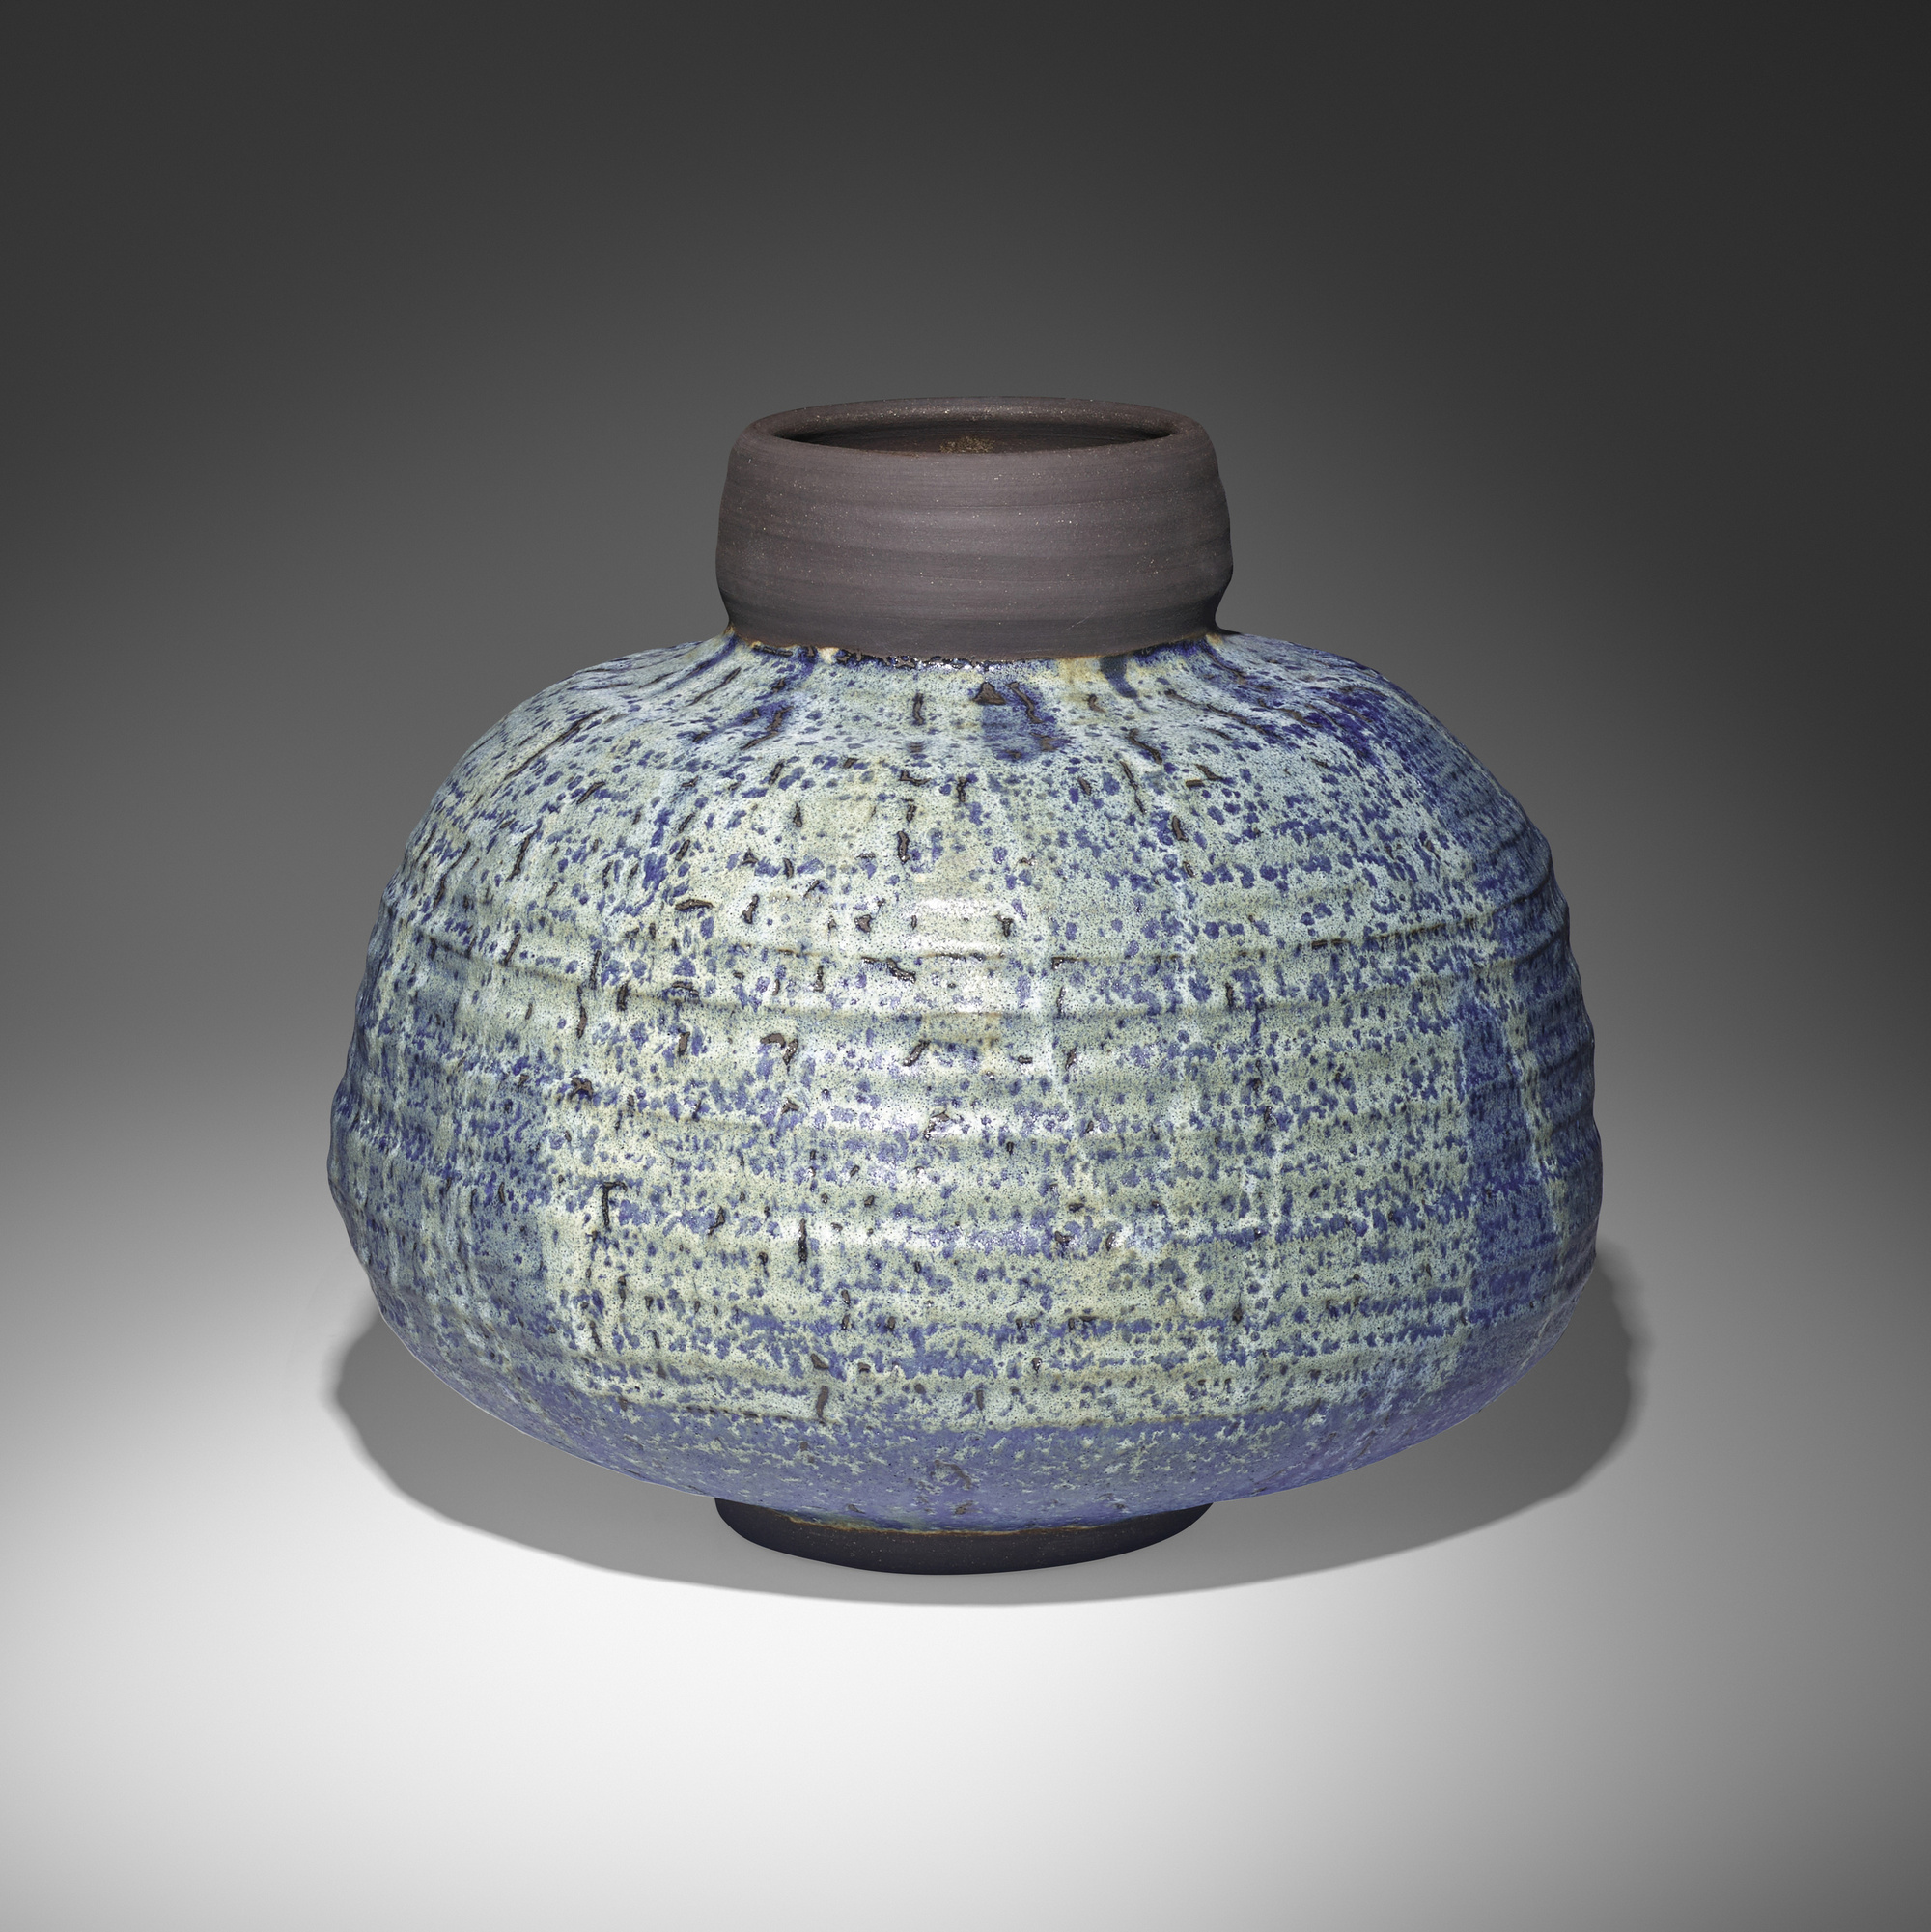 342: ADAM SILVERMAN, Vase < Post-War Ceramics, 13 April 2023 